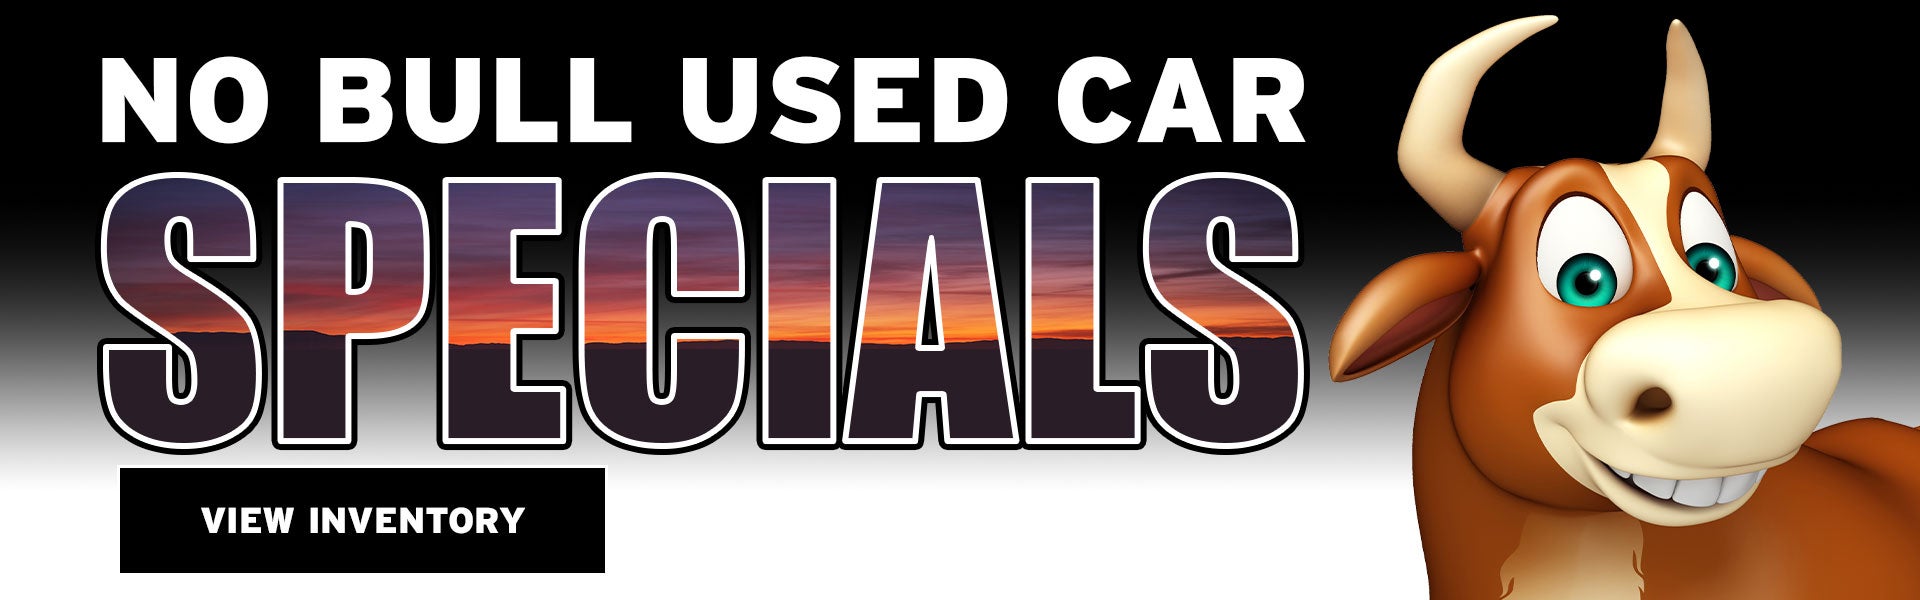 Used Car Specials